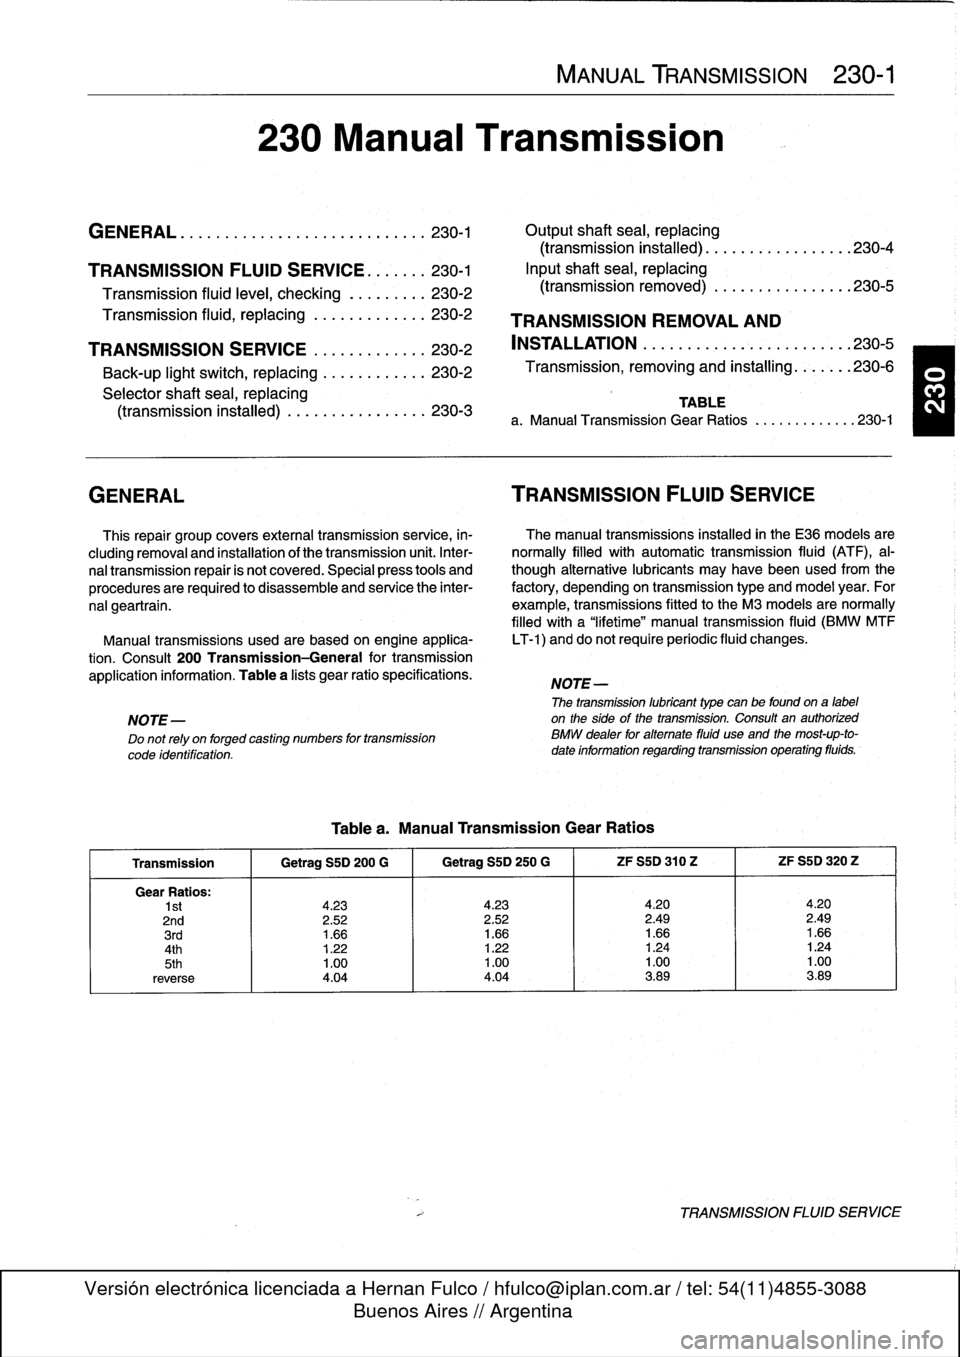 BMW 318i 1997 E36 User Guide 
230
Manual
Transmission

MANUAL
TRANSMISSION

	

230-1

GENERAL
...
.
............
.
.......
.
.
.
.
230-1

	

Output
shaft
sea¡,
replacing

(transmission
installed)
....
.
.....
.
.....
.230-4

TRA